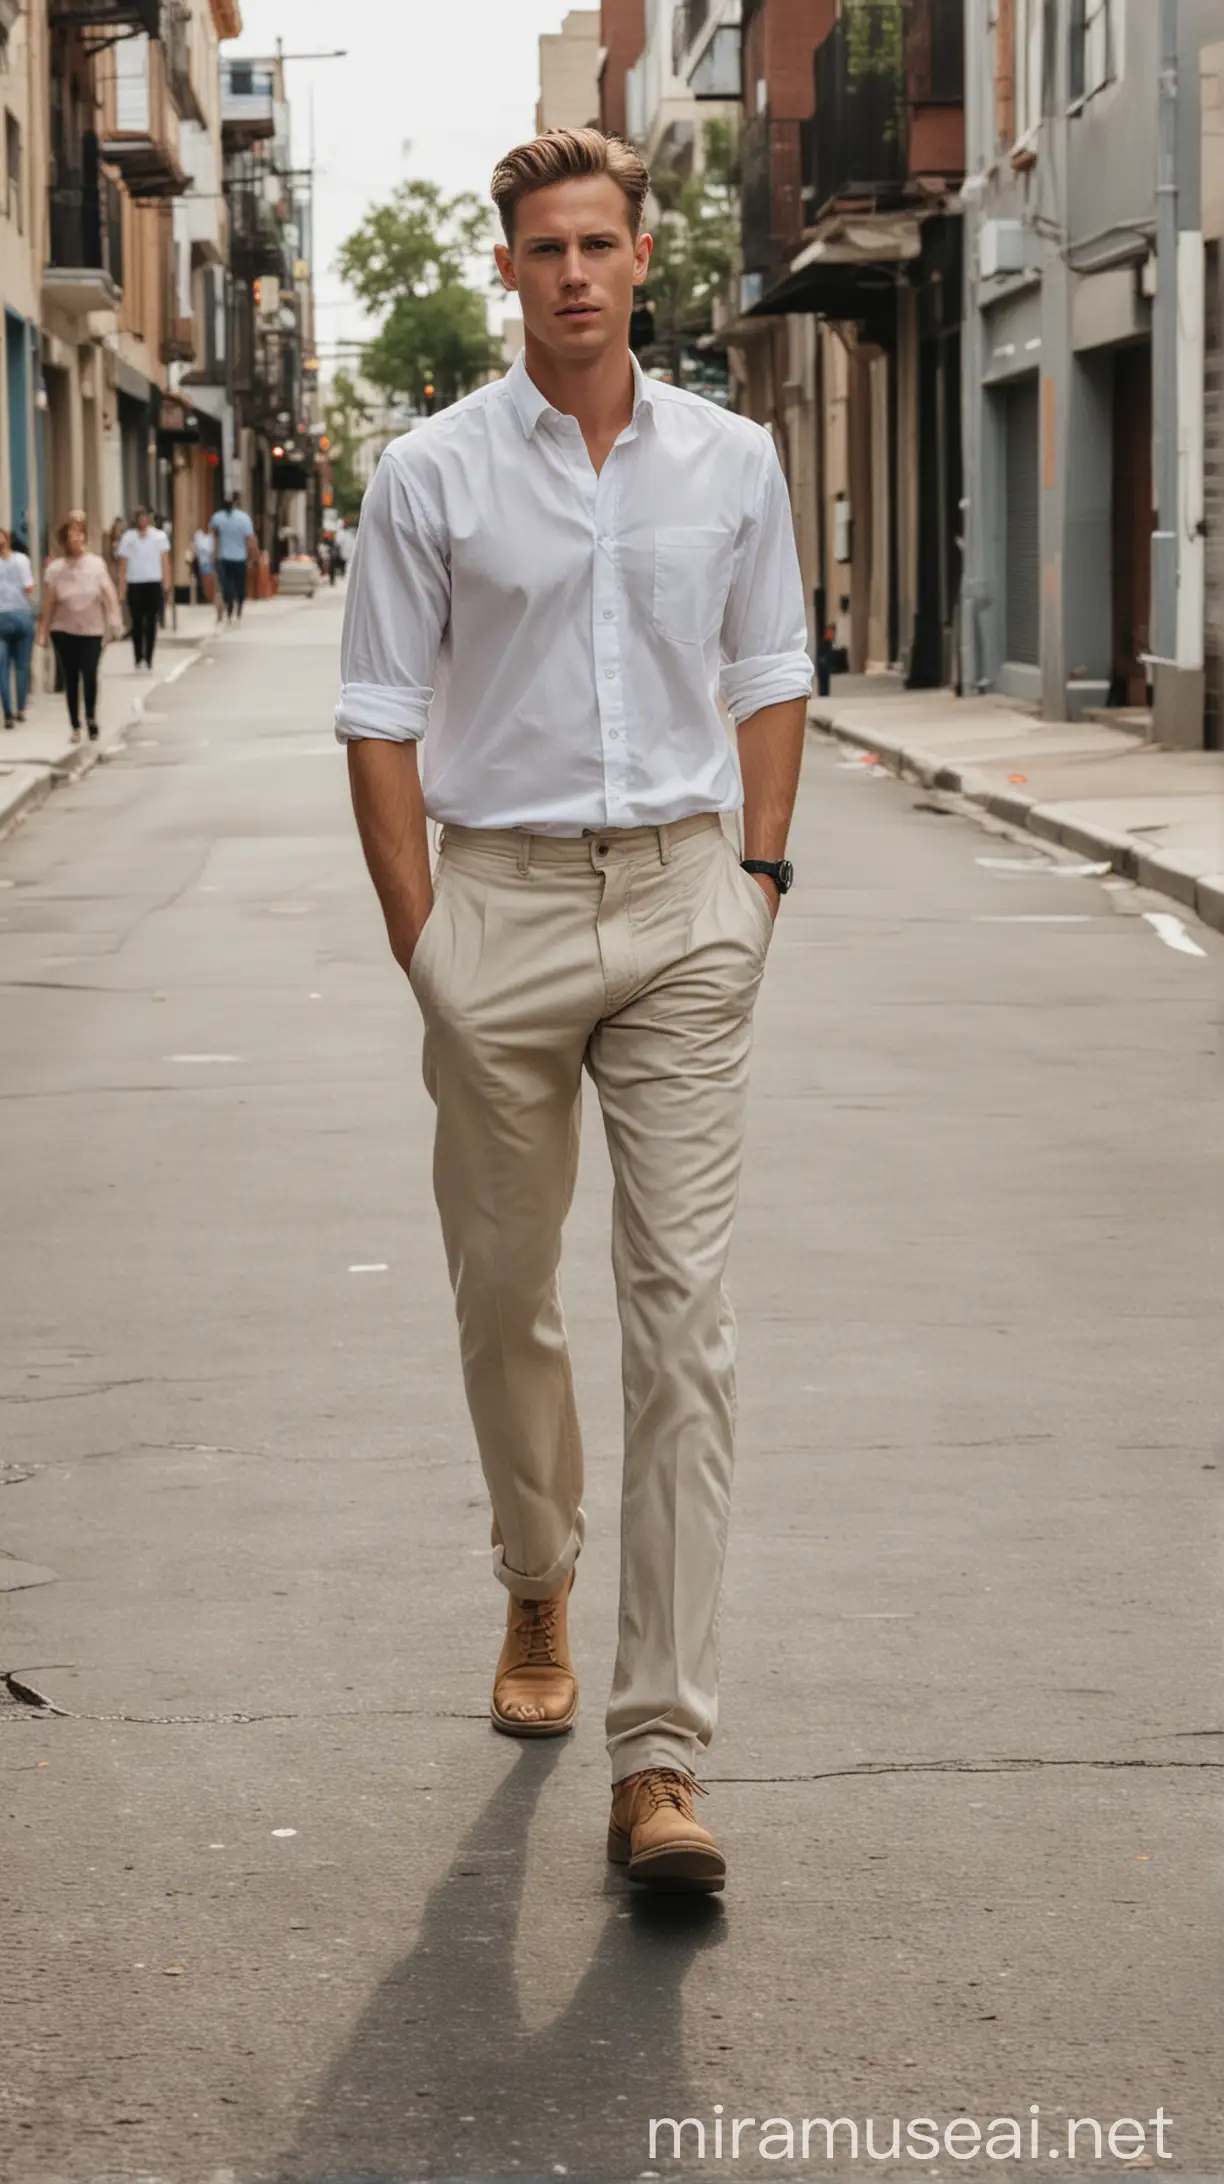 American Man in White Shirt Strolling Down Empty Street